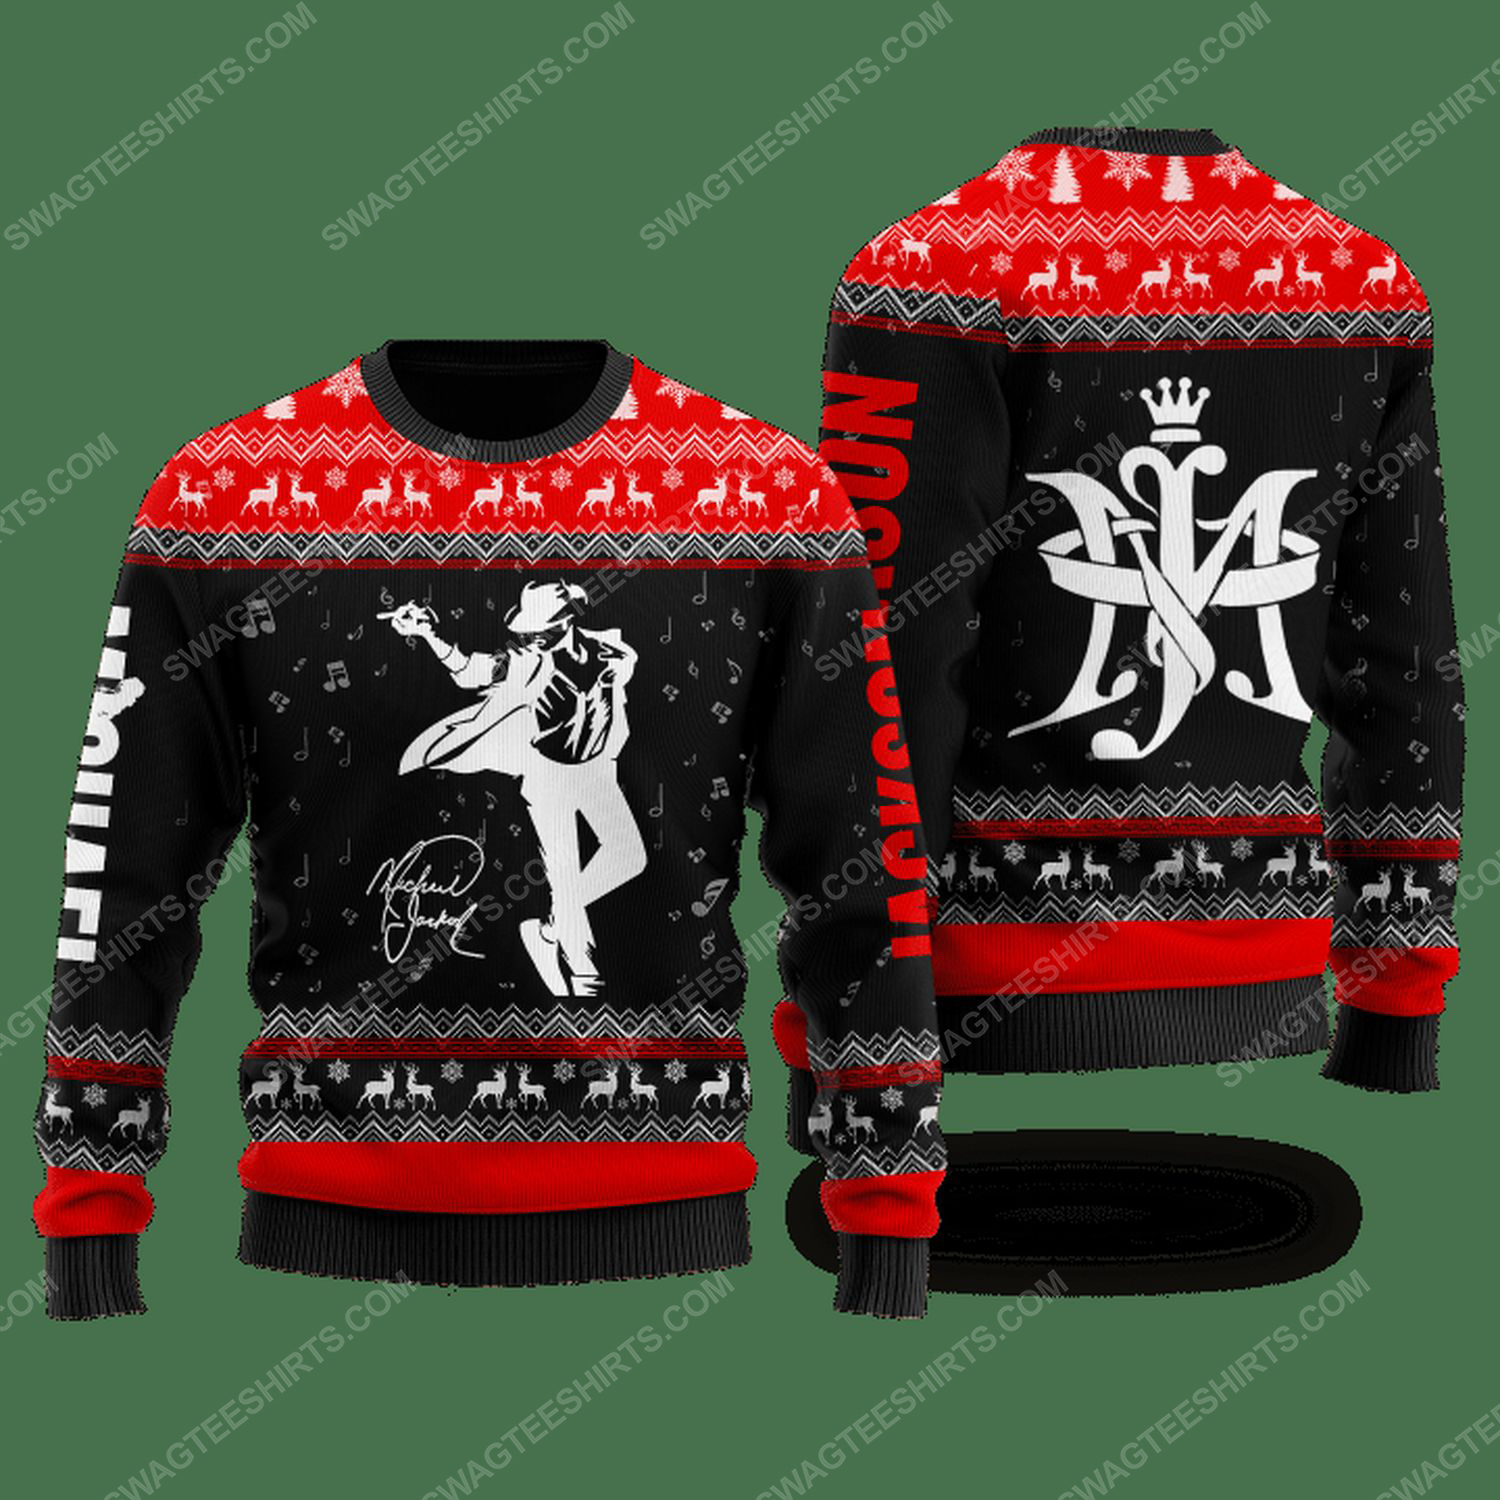 Michael jackson signature ugly christmas sweater